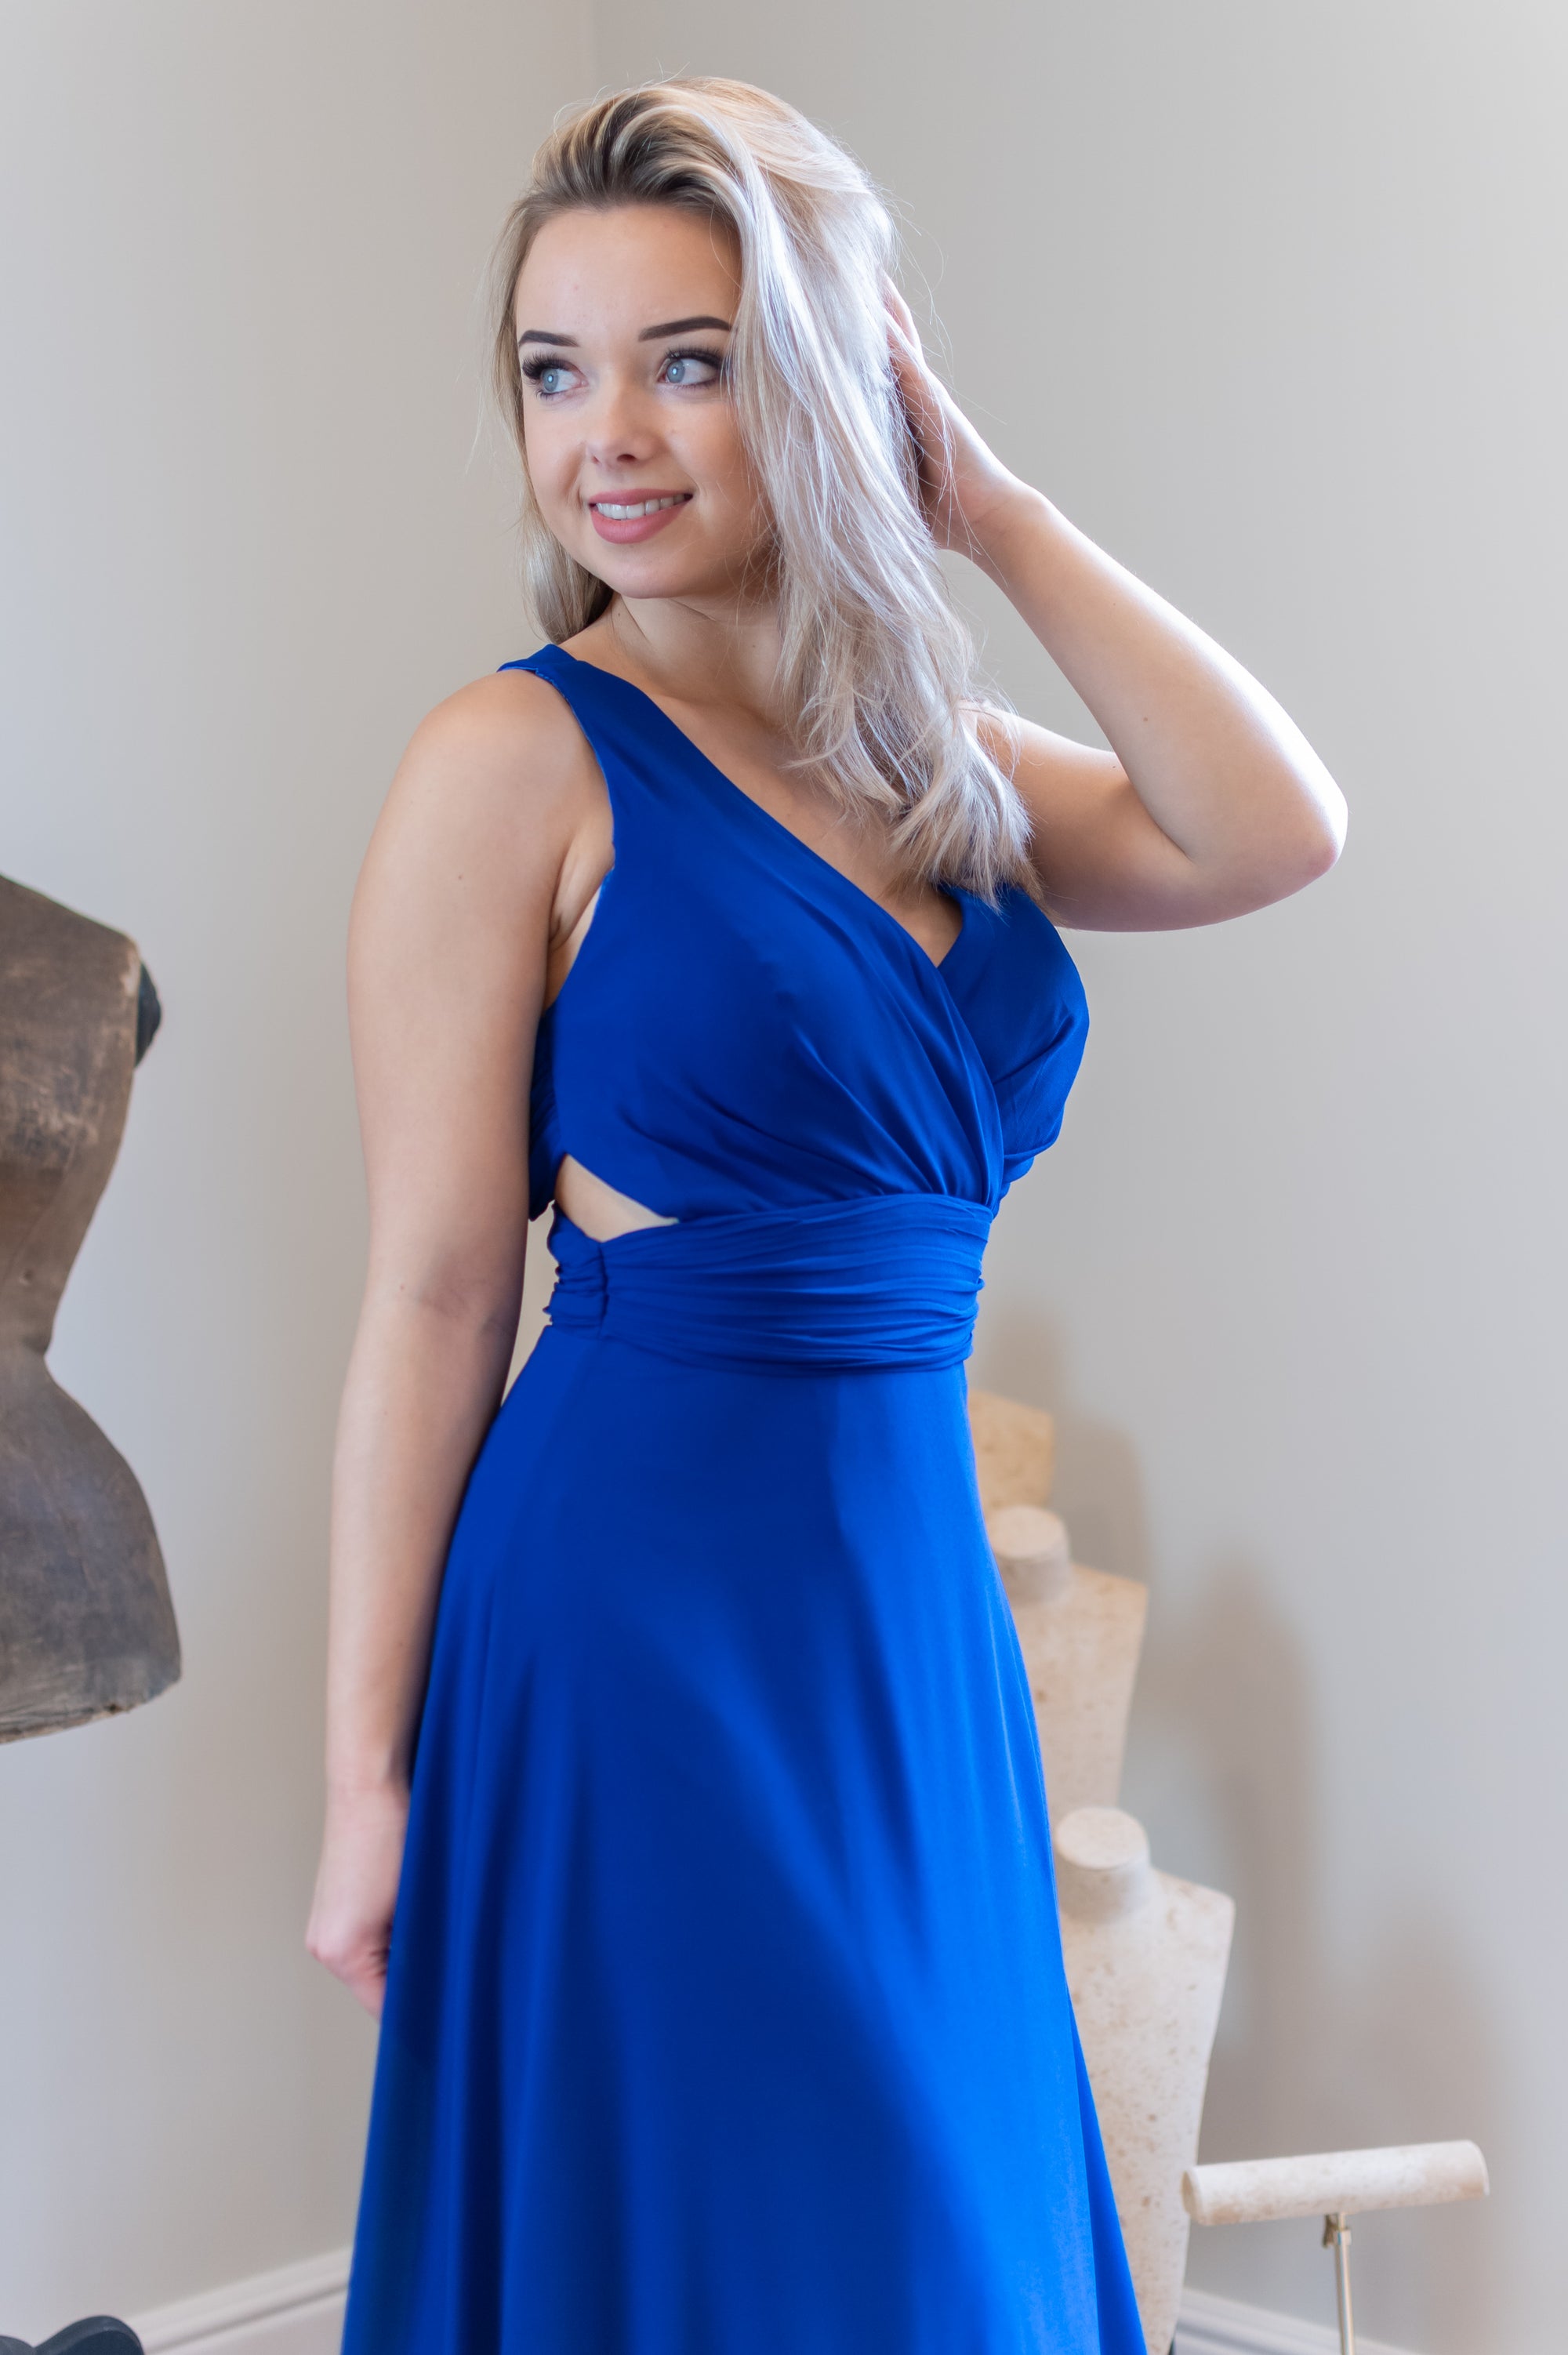 Cut Out Dress - Bright Blue